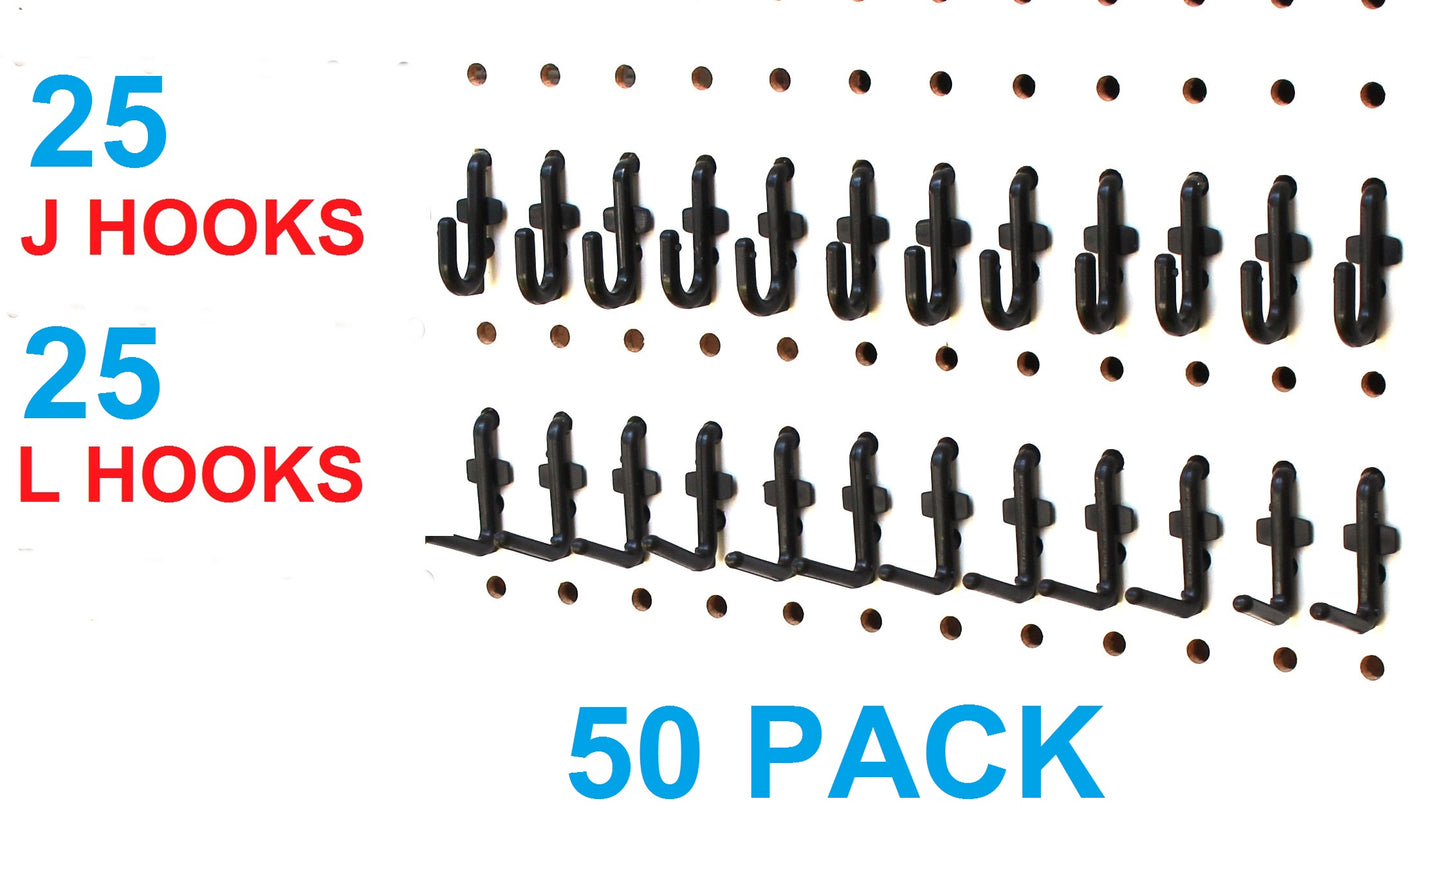 J & L Style Plastic Black Pegboard Locking Hooks Kits - Mulit-Packs | Garage storage jewelry tools crafts